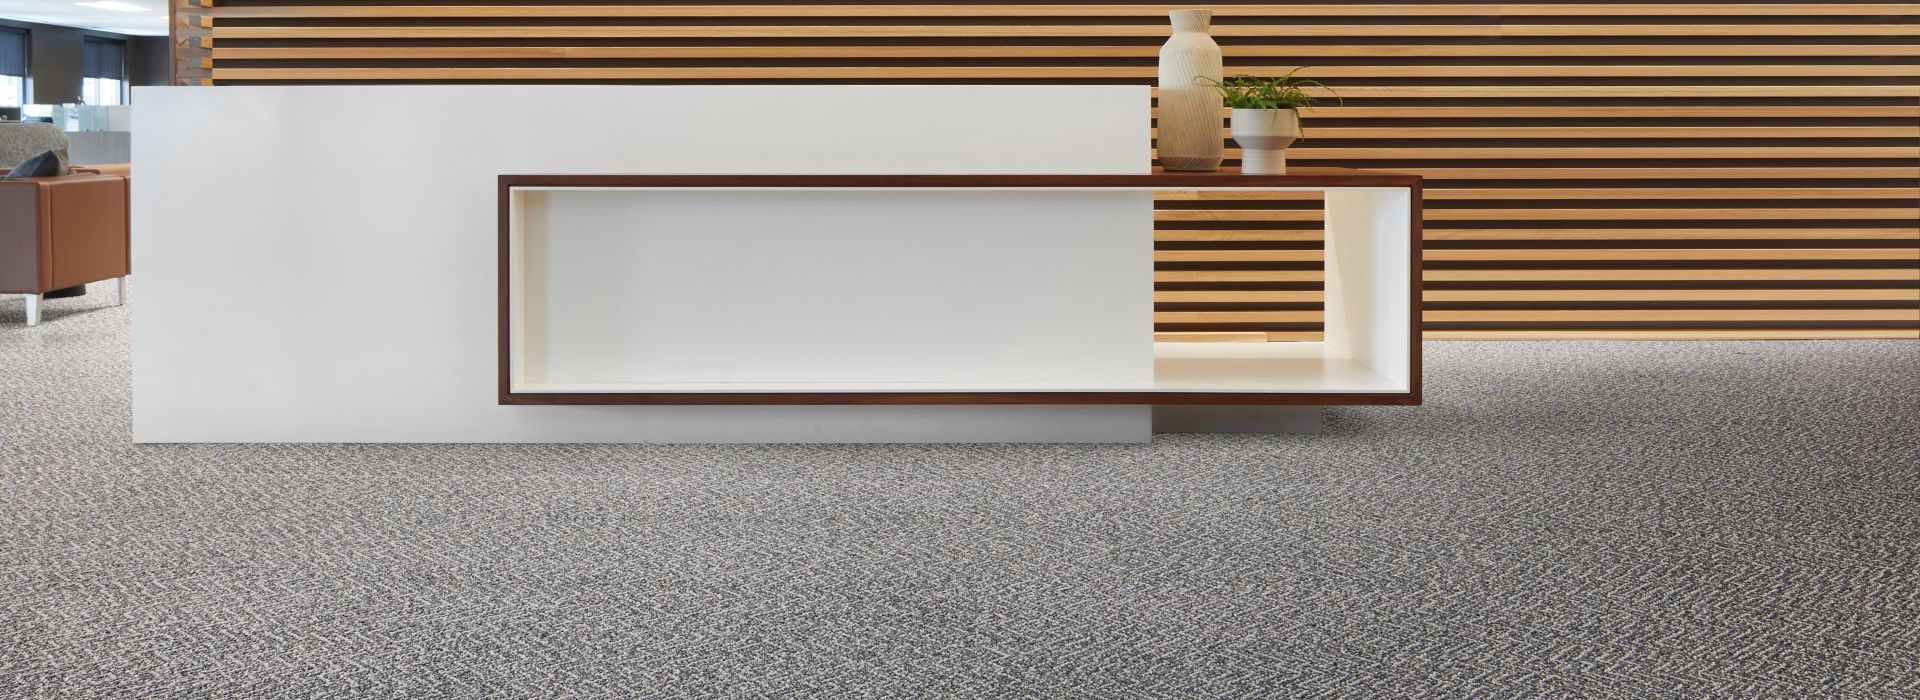 Interface Third Space 308 plank carpet tile in reception area imagen número 1